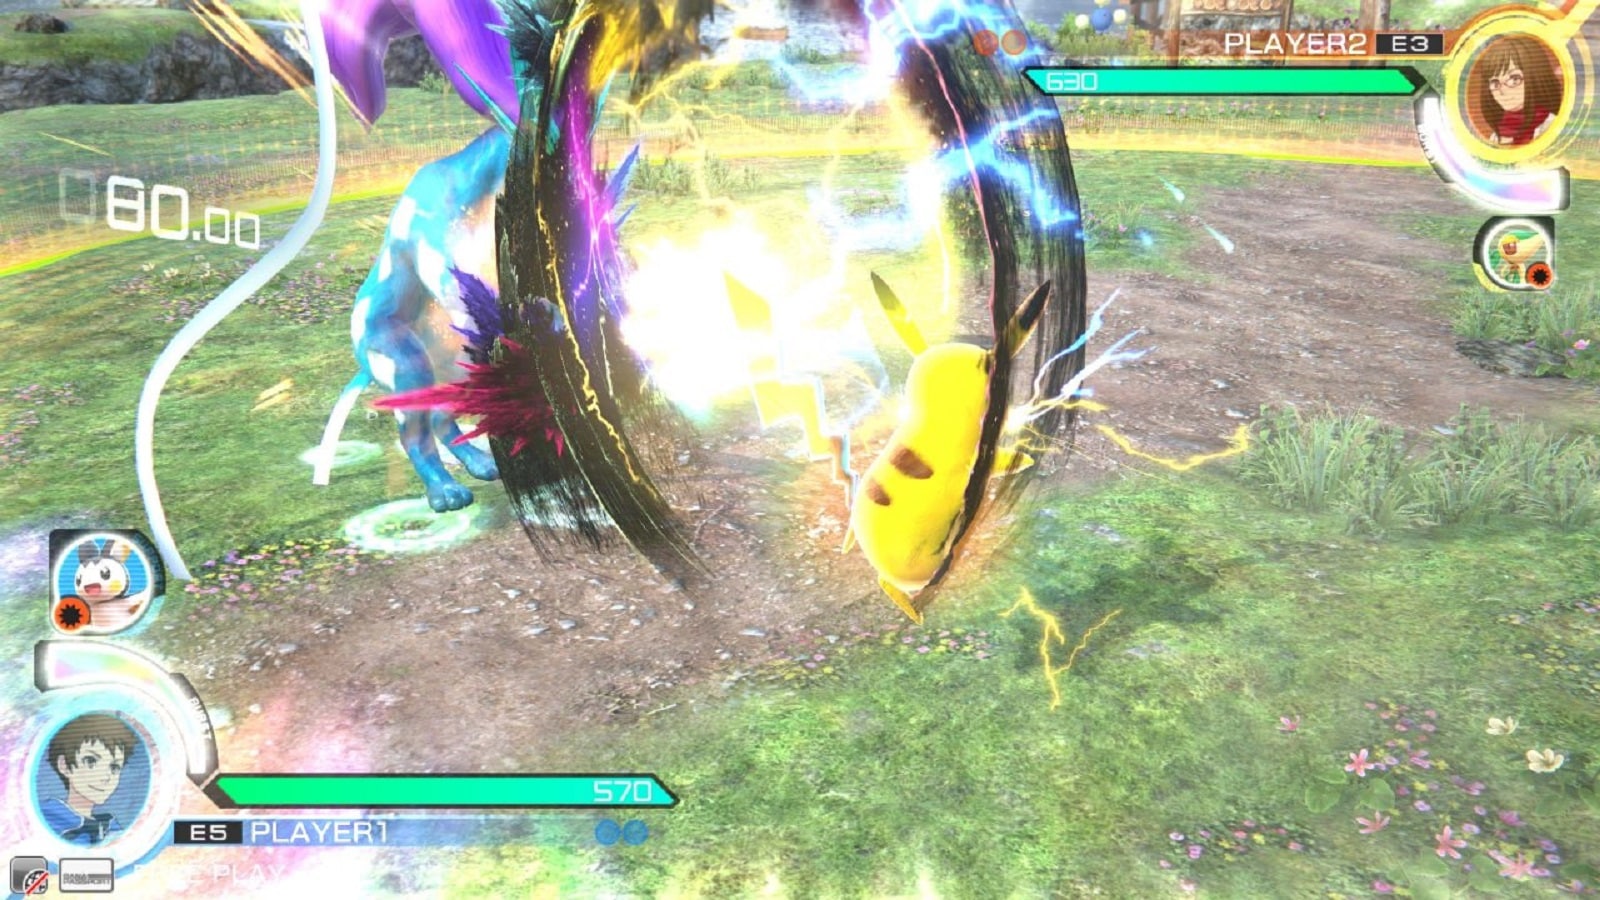 Pokken Tournament Roll Attack Gameplay Screenshot